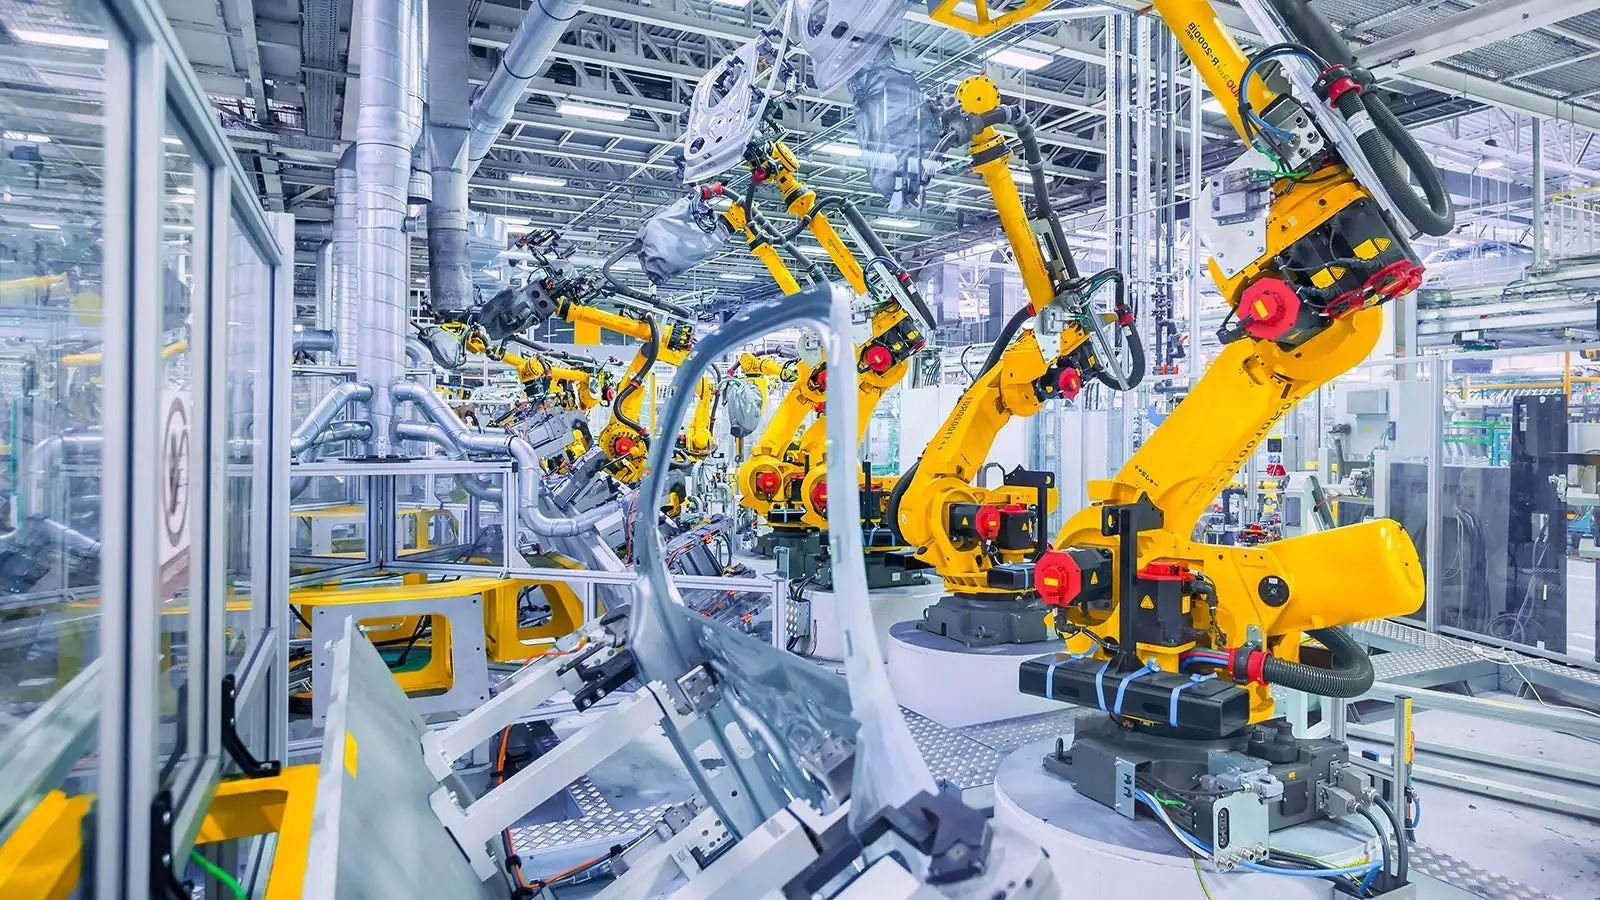 visuel de bras de robots dans une usine